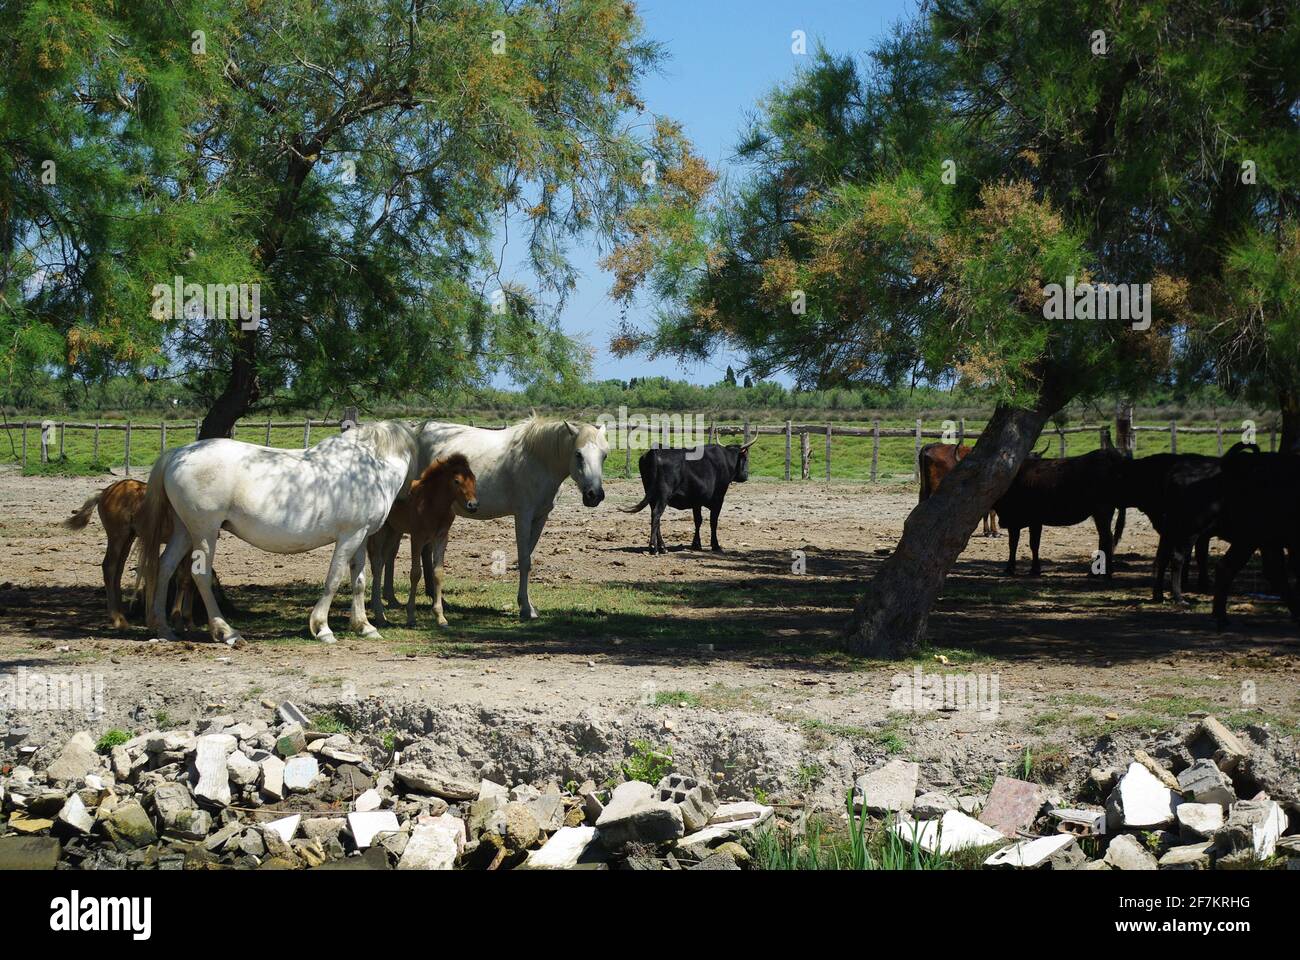 White horses and black bulls of the Camargue region, France Stock Photo